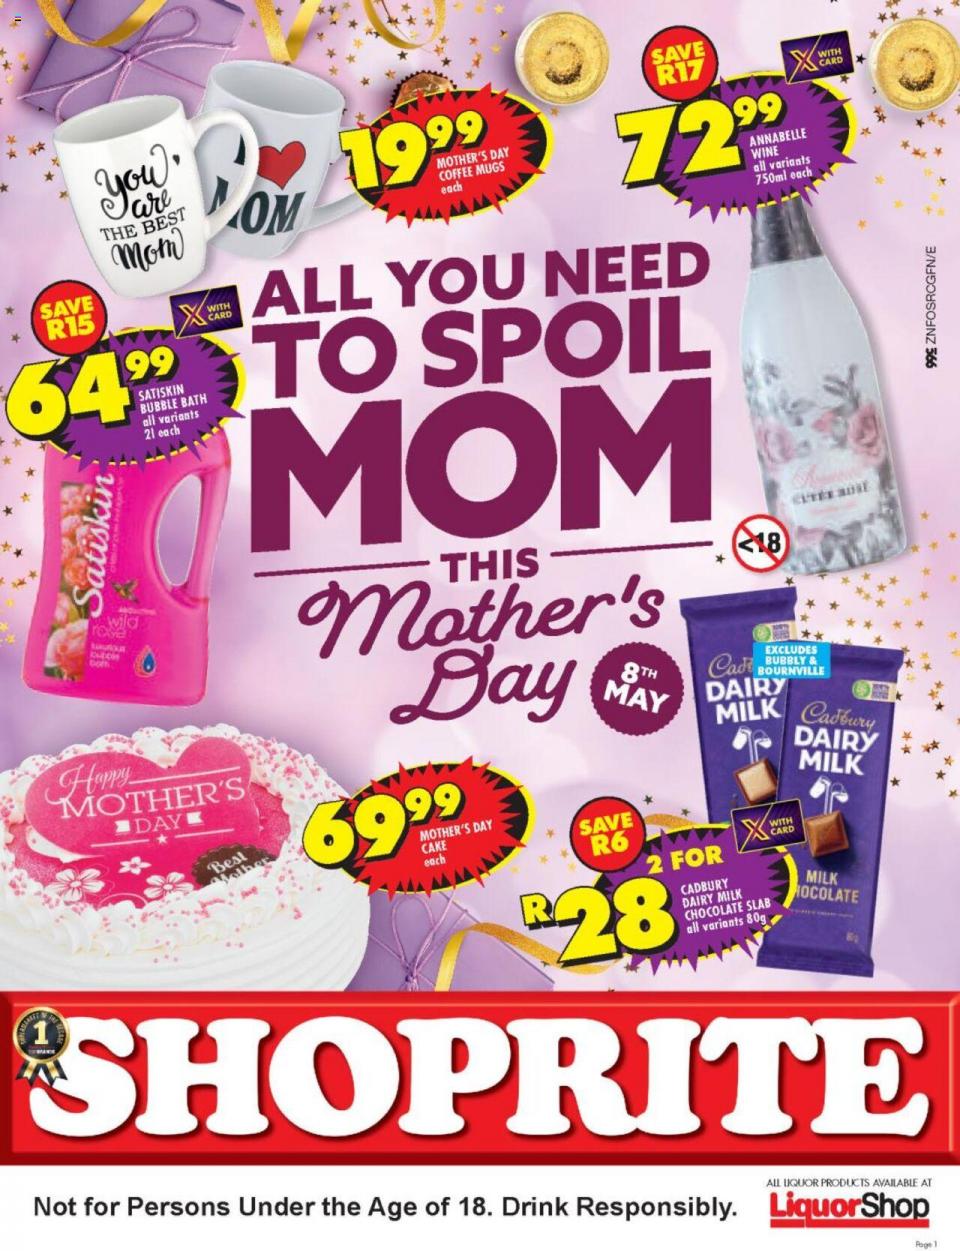 Shoprite Specials Mother's Day 2022 Shoprite Catalogue Specials SA